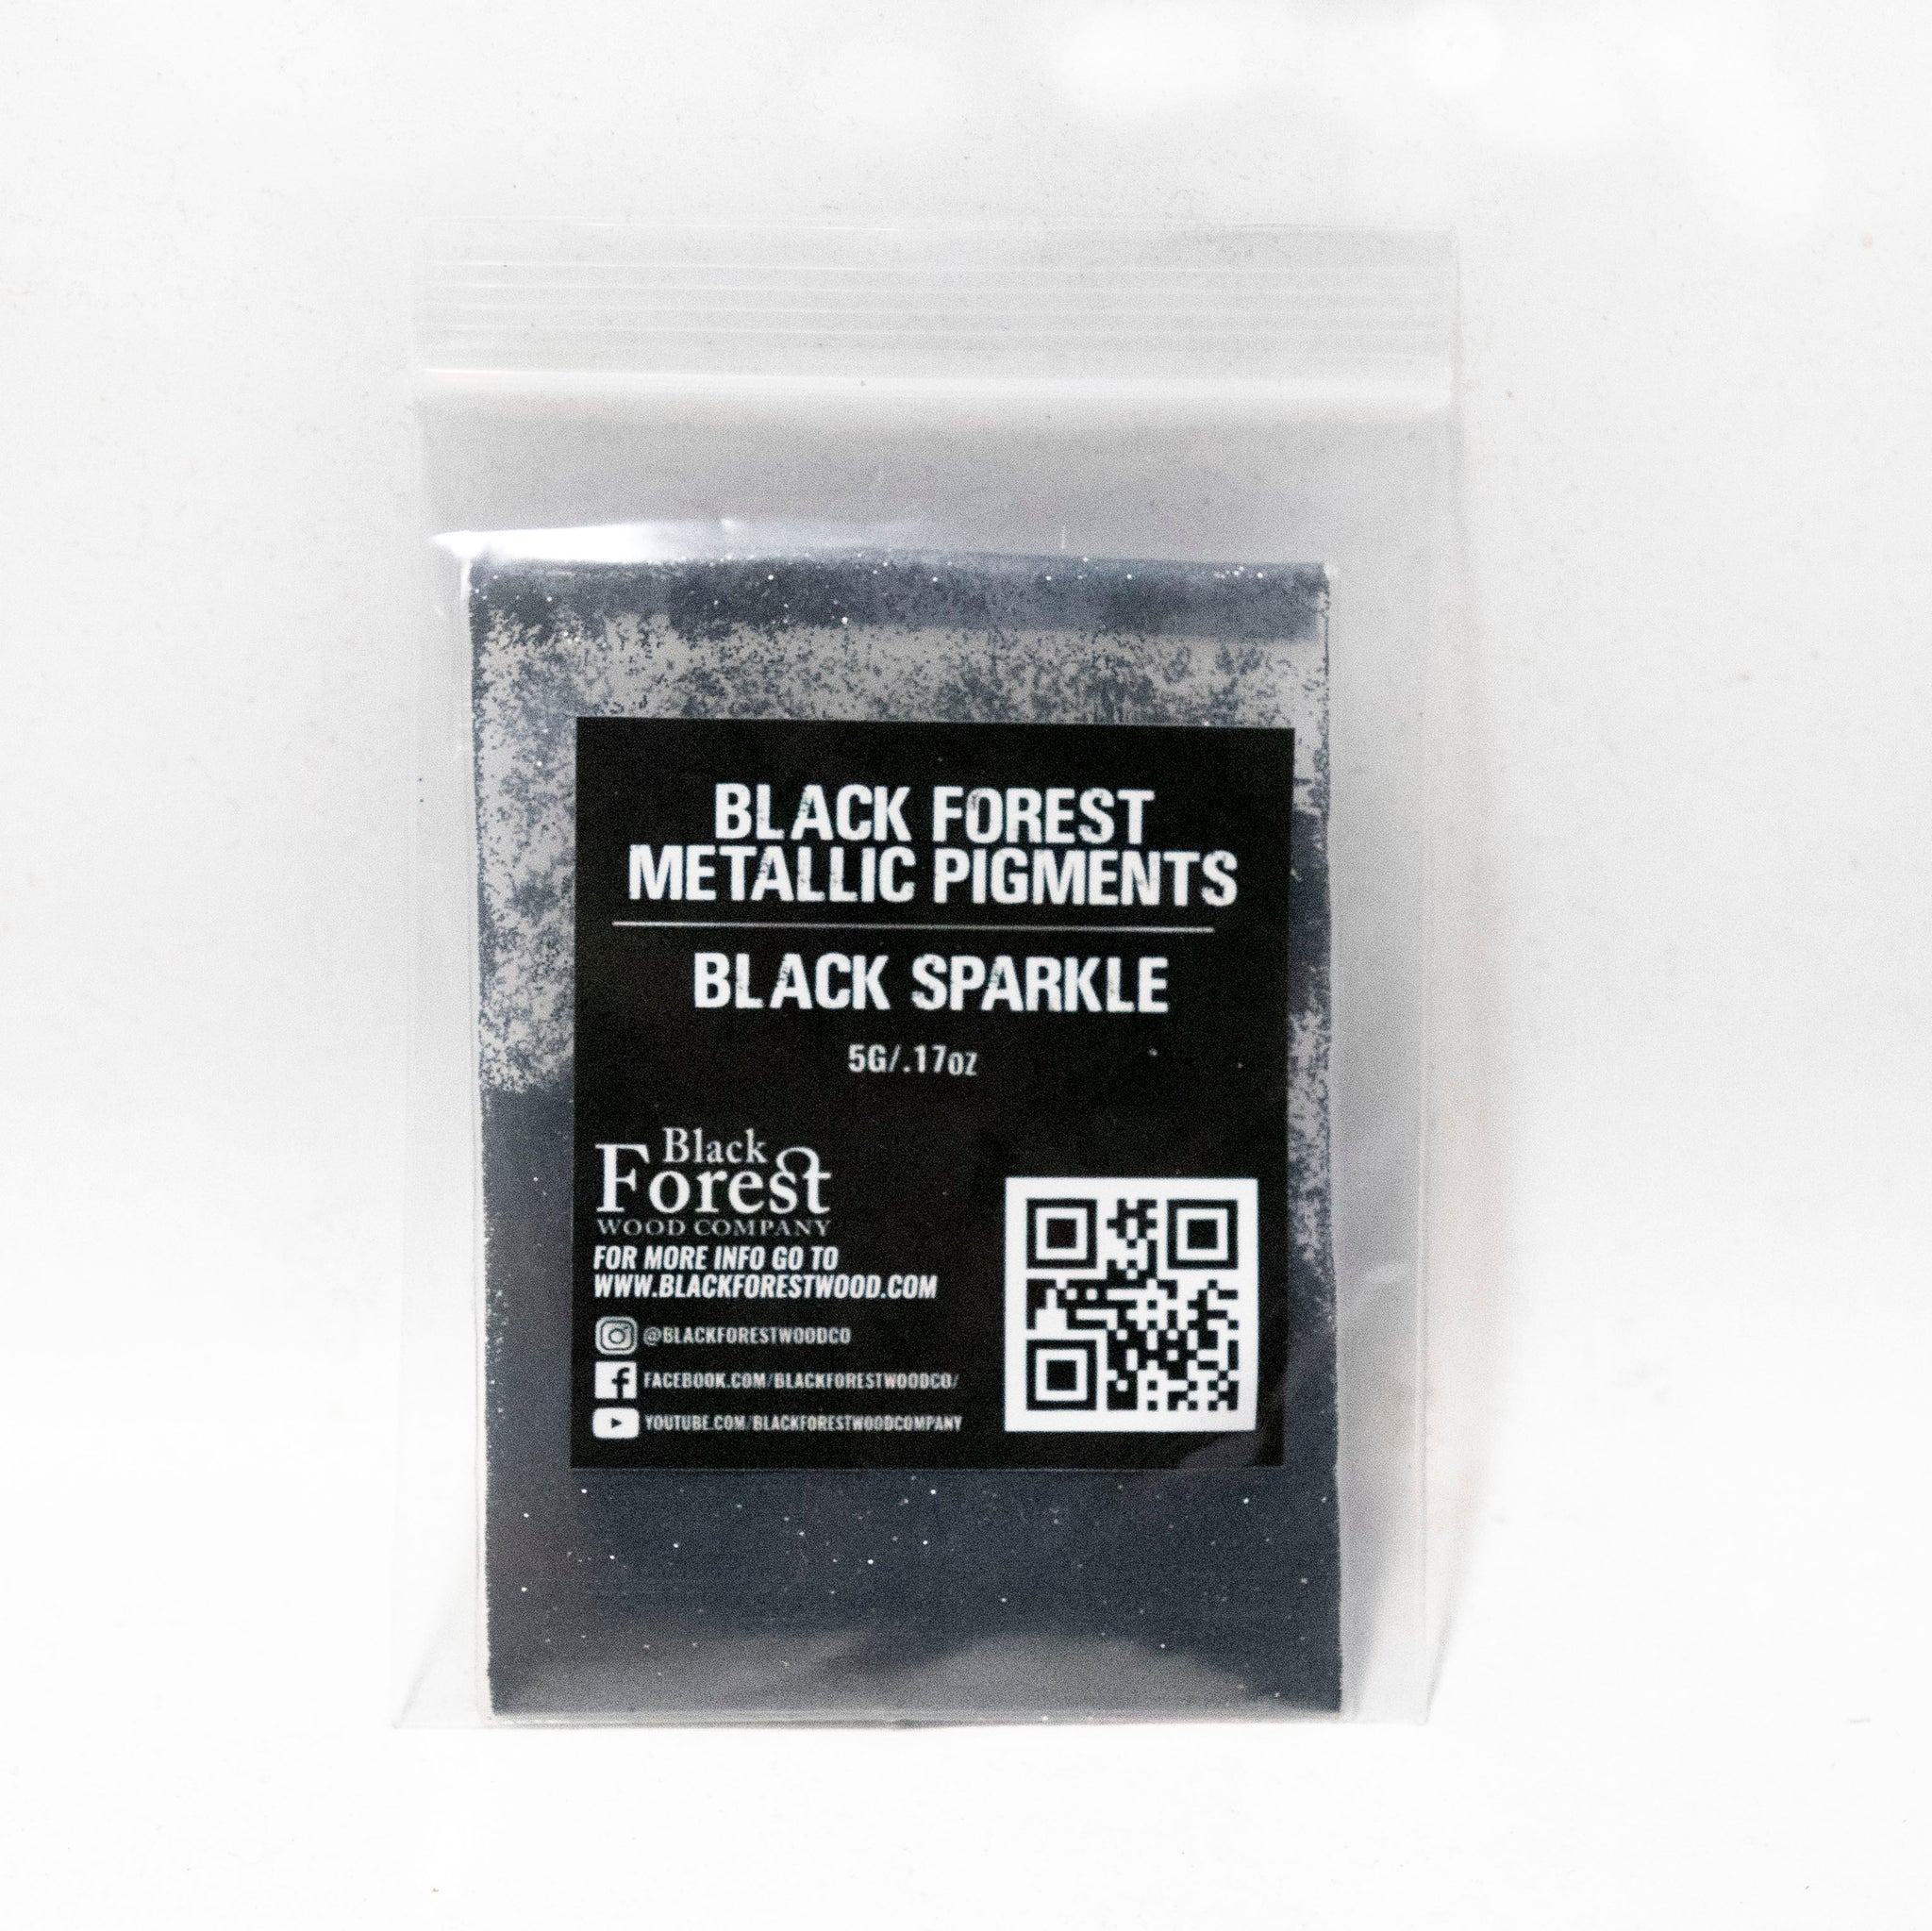 Black Sparkle - Black Forest Metallic Pigment - Black Forest Wood Co.